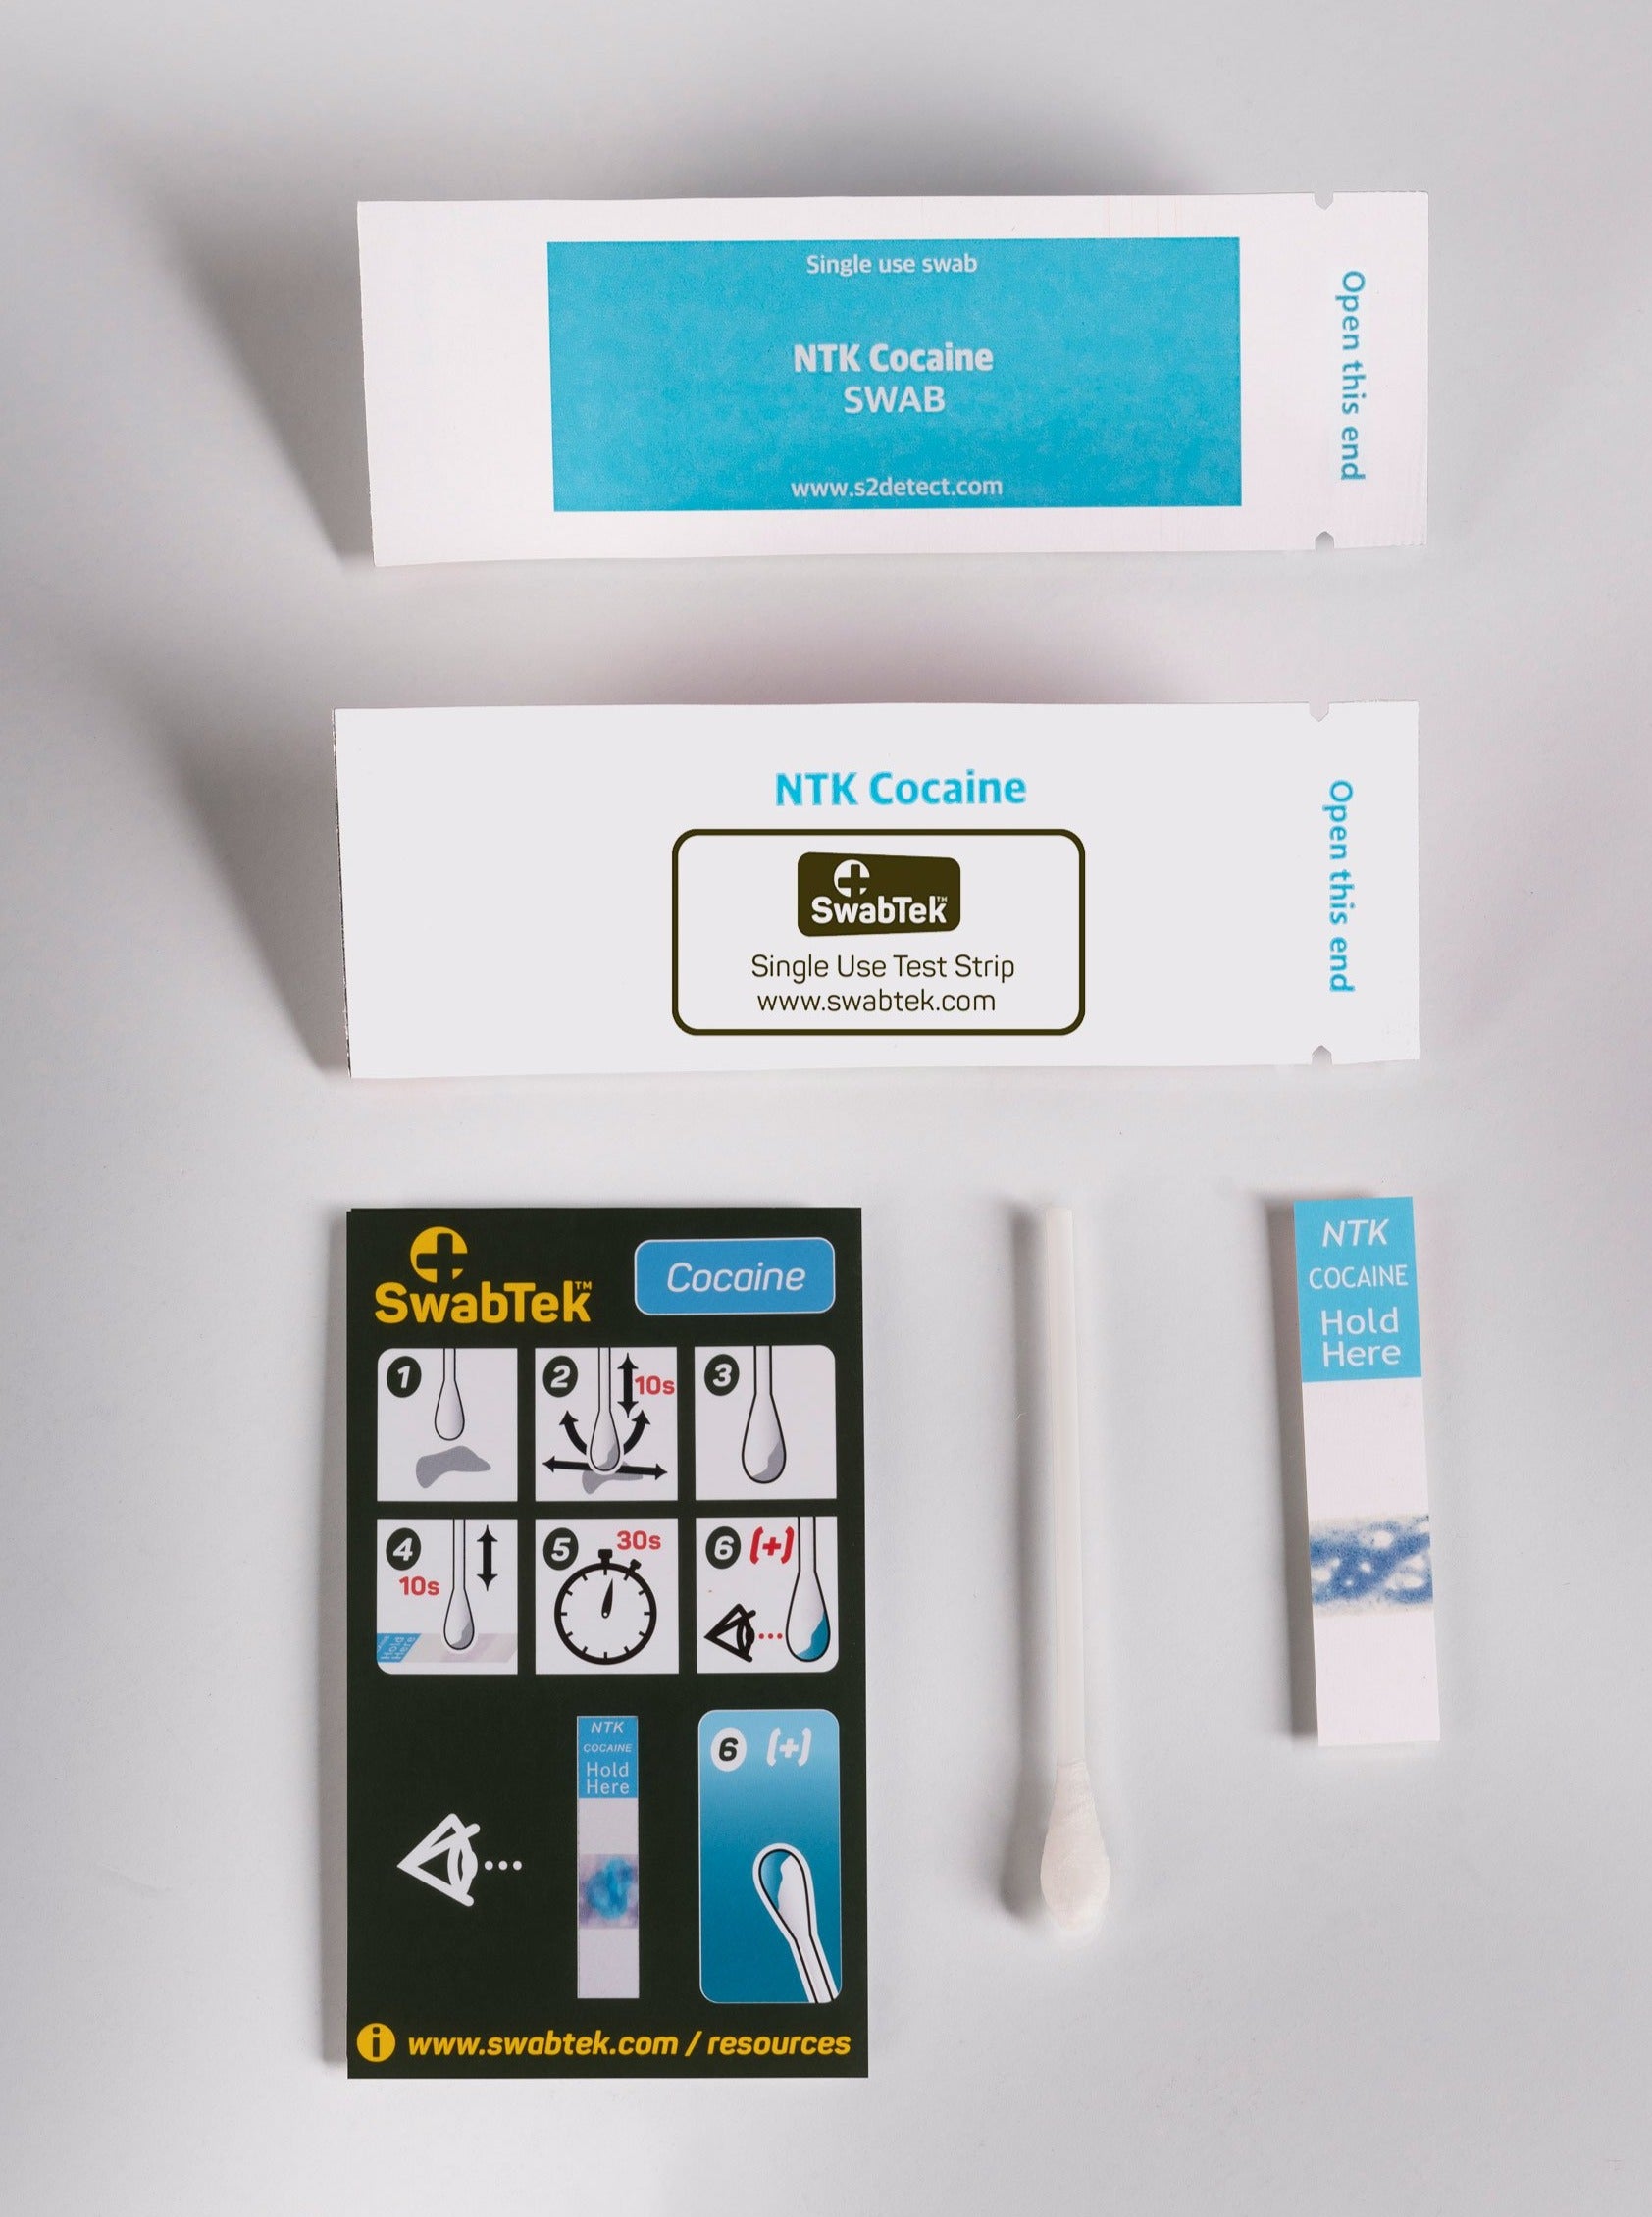 Cocaine Testing Kit